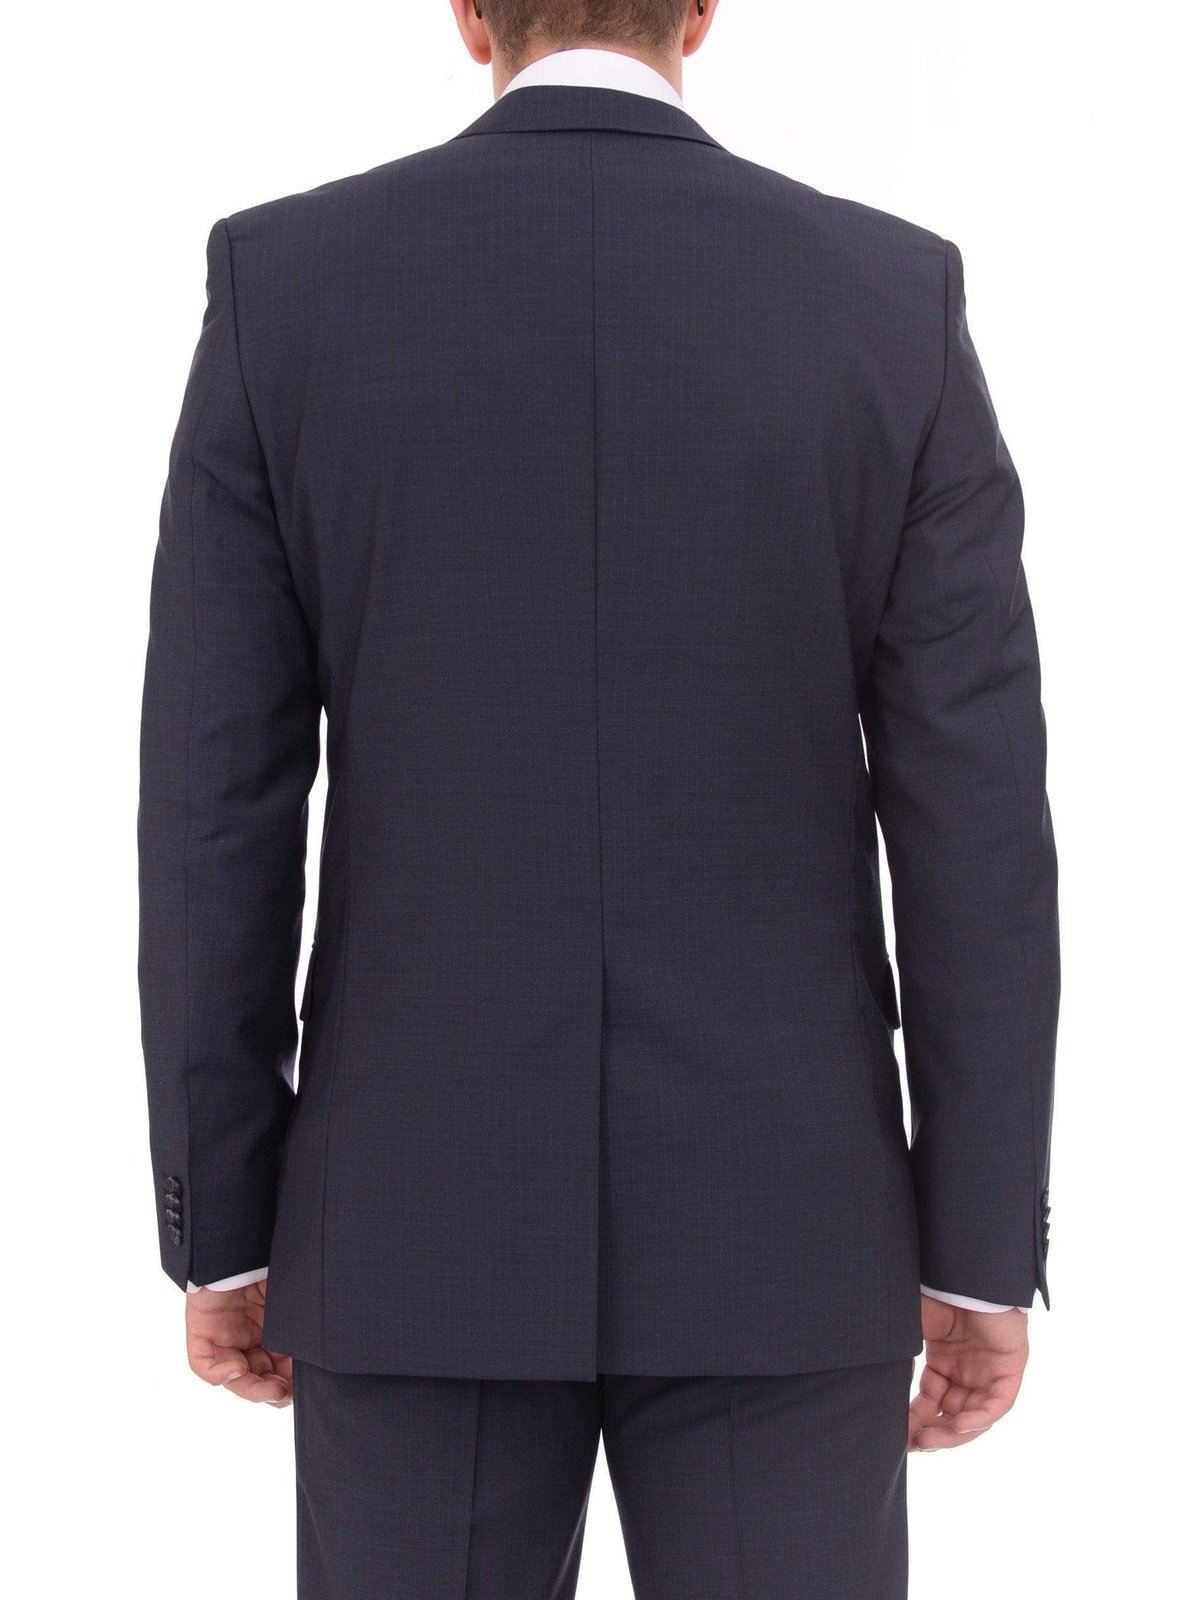 Hugo Boss Aamon/hago Mens Slim Navy Blue Textured Two Button Suit | The Suit